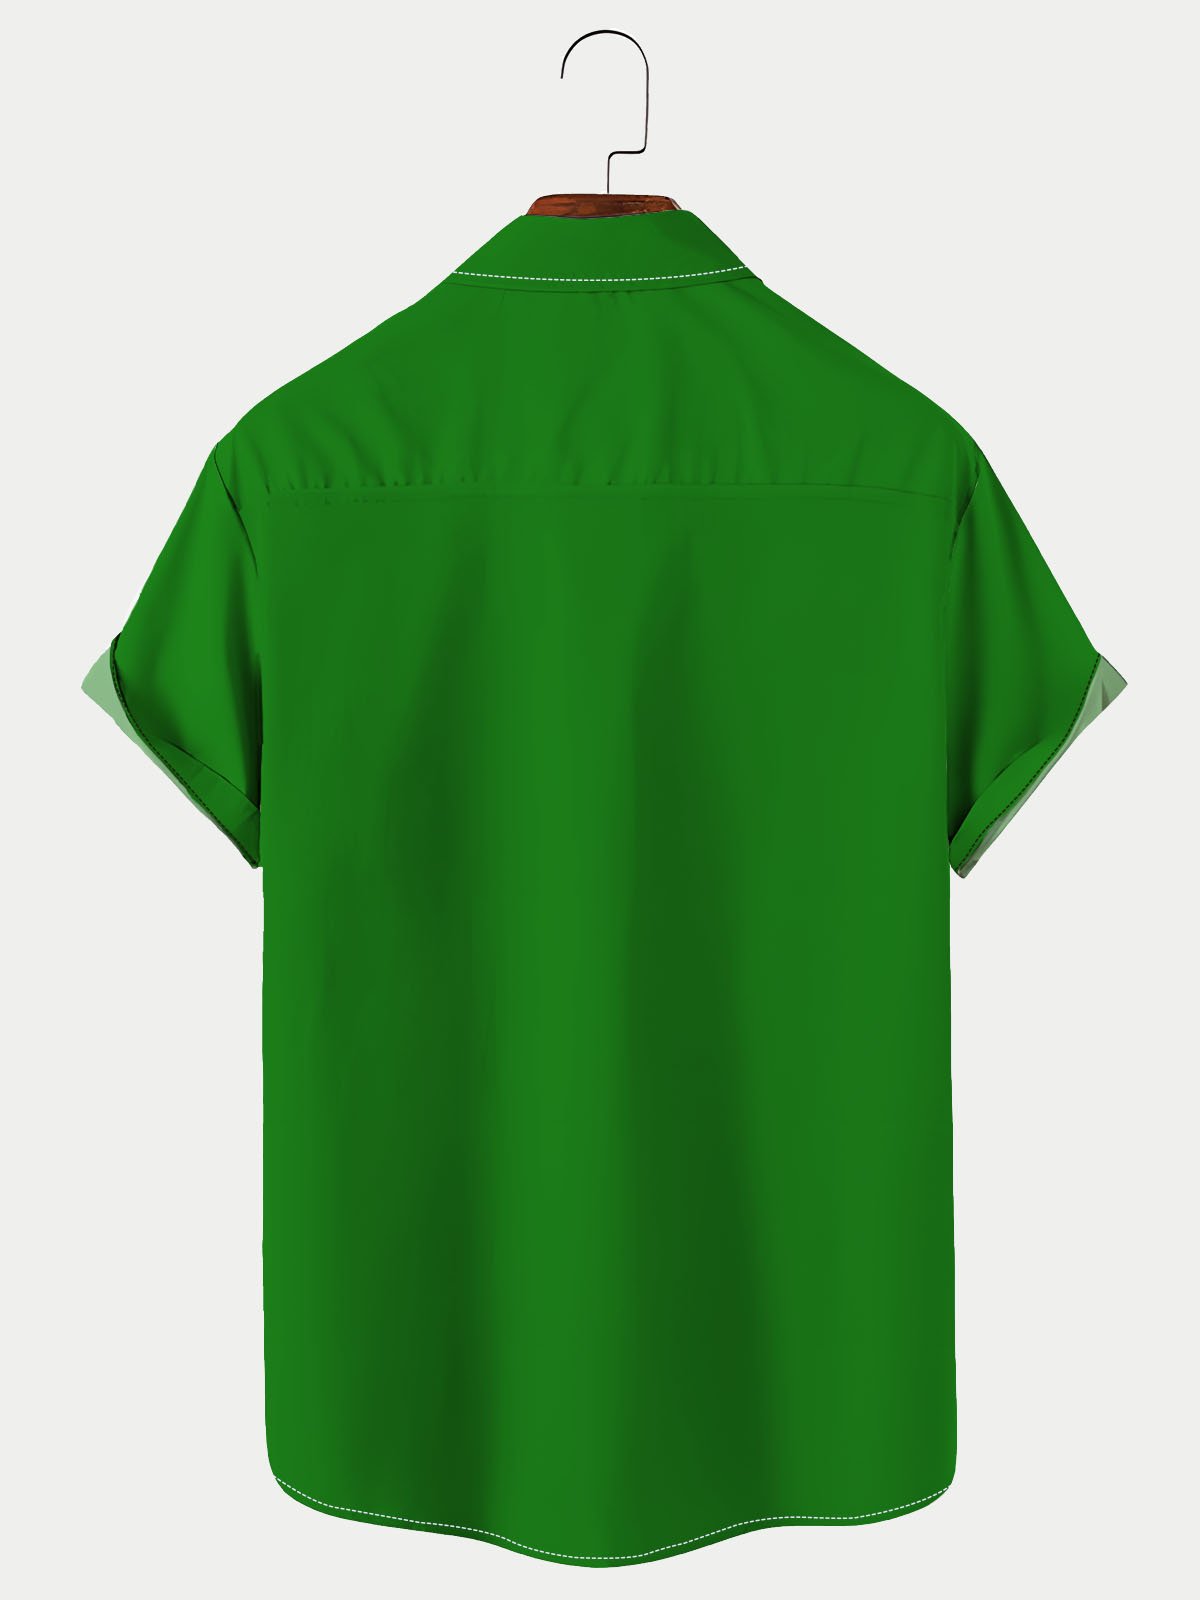 Royaura St. Patrick's Day Shamrock Print Men's Holiday Hawaiian Shirt Breathable Plus Size Shirt